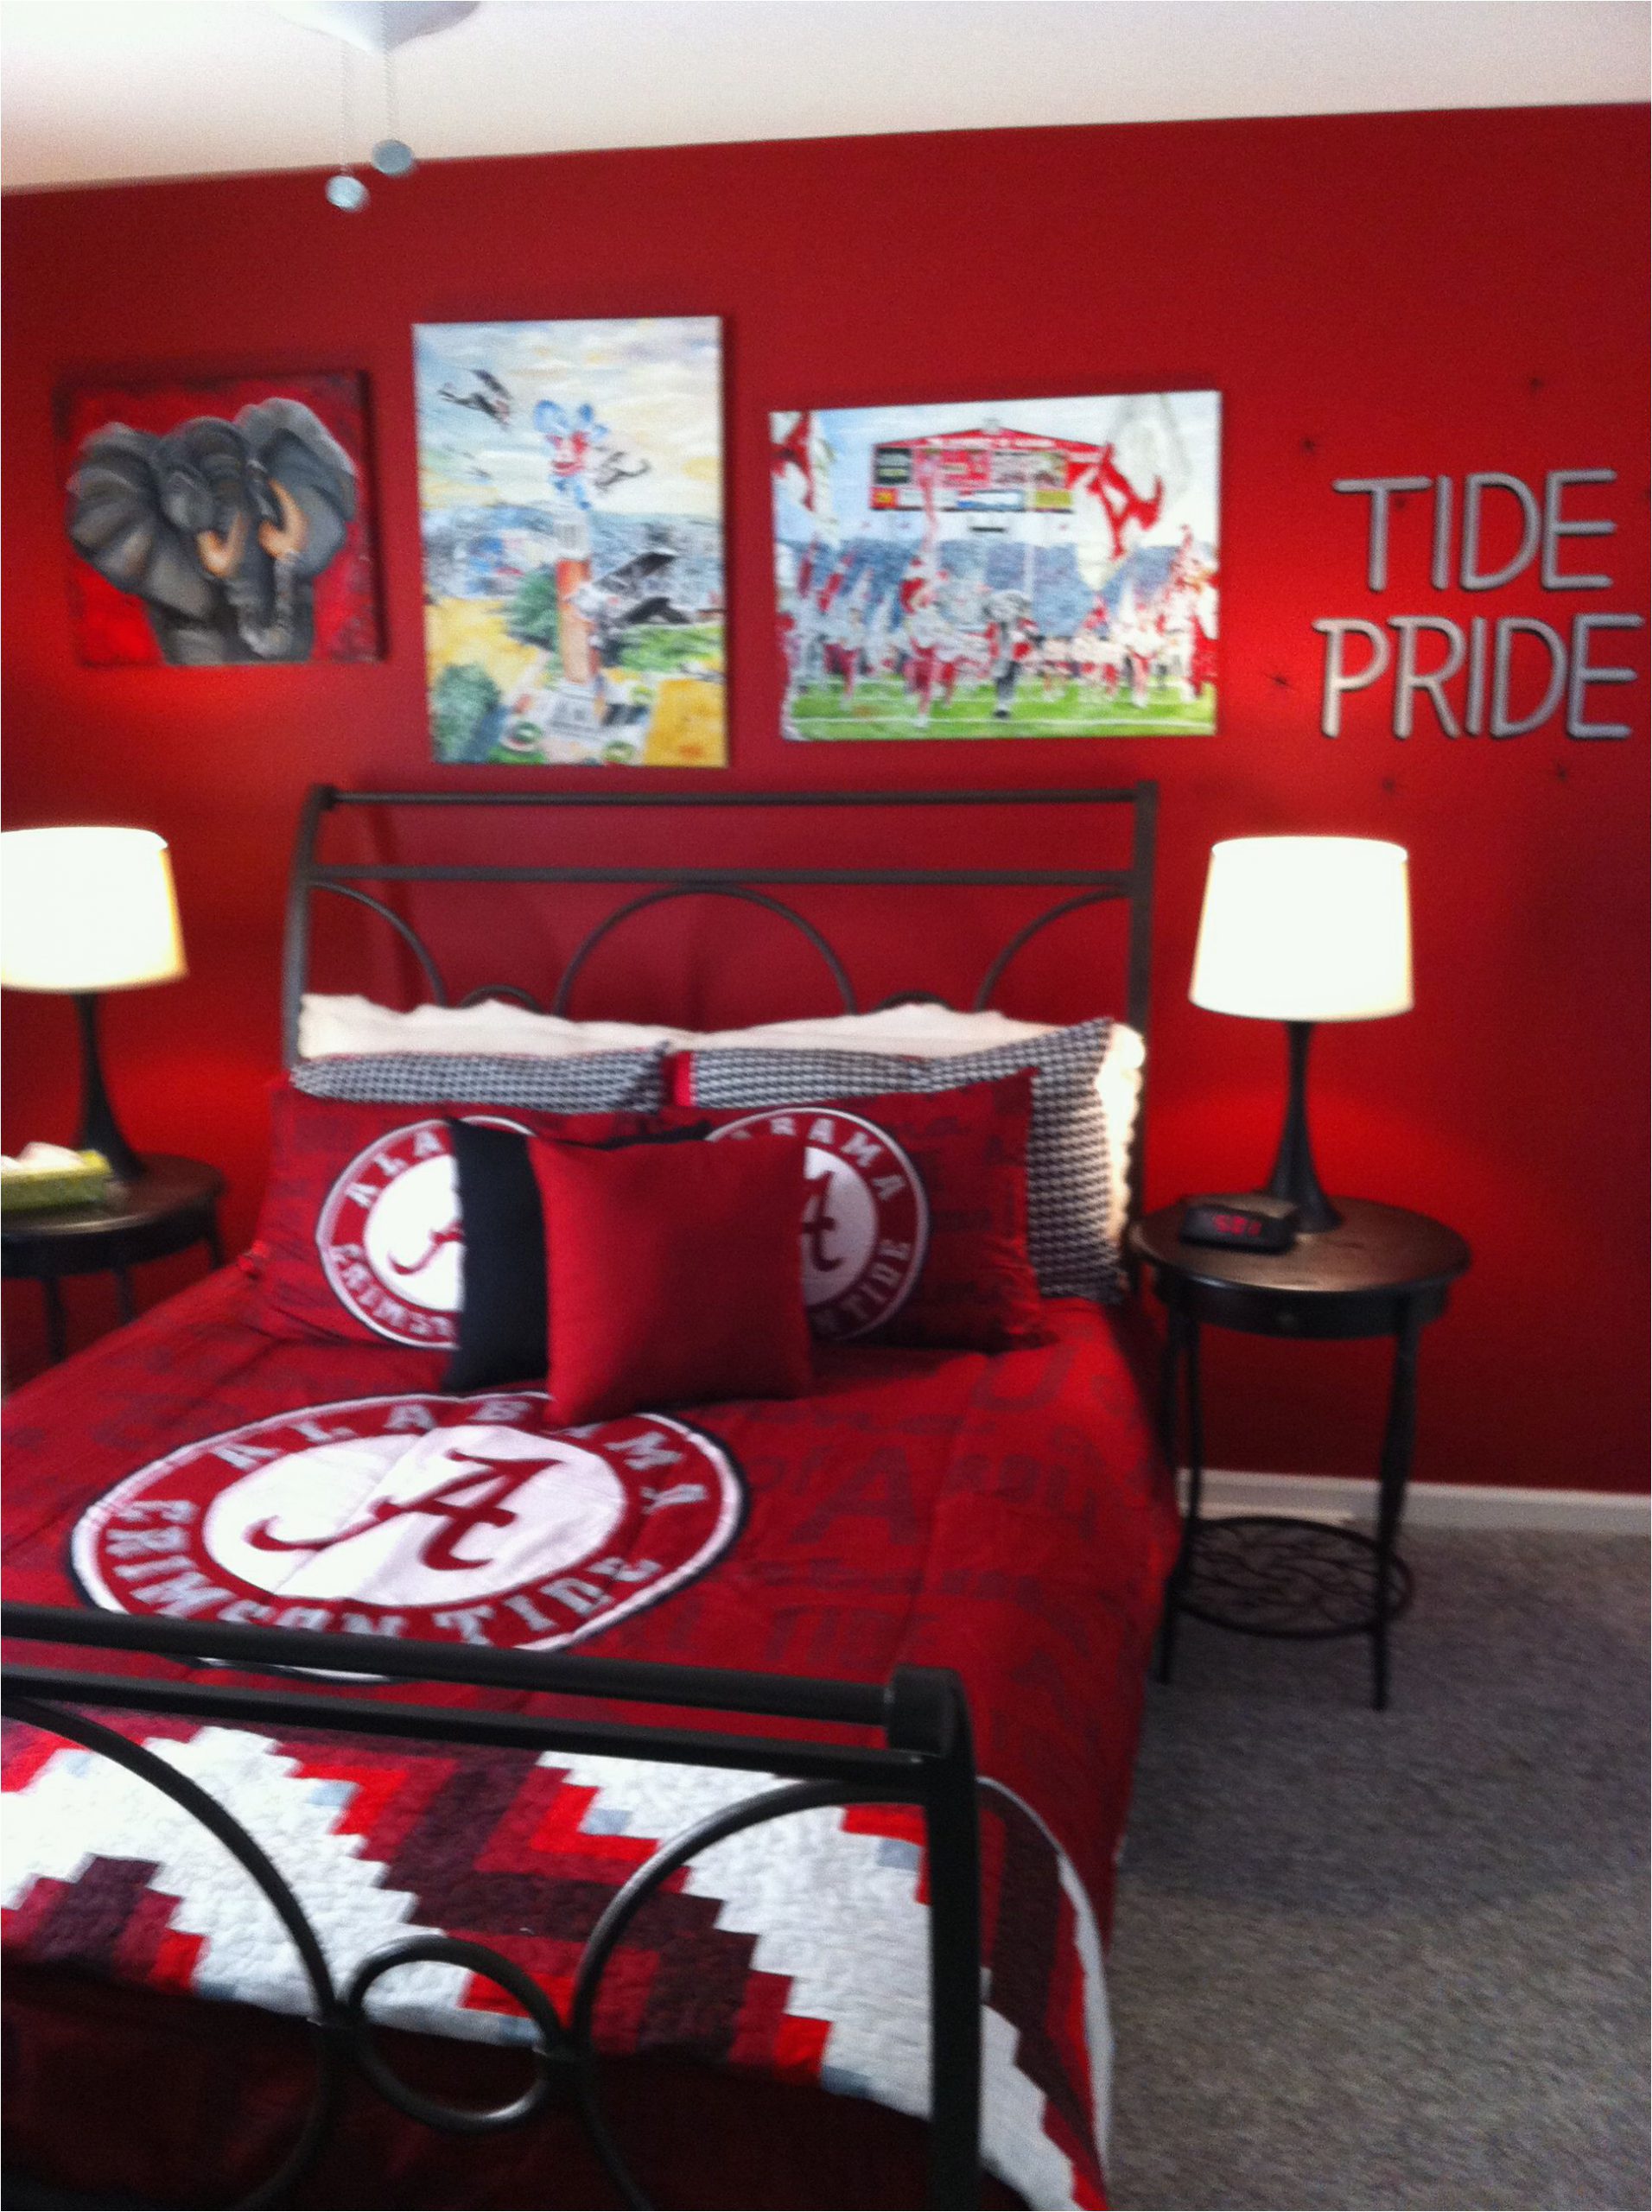 Alabama Crimson Tide Bathroom Rug Set Alabama Bedroom Rolltidewareagle Sports Stories that